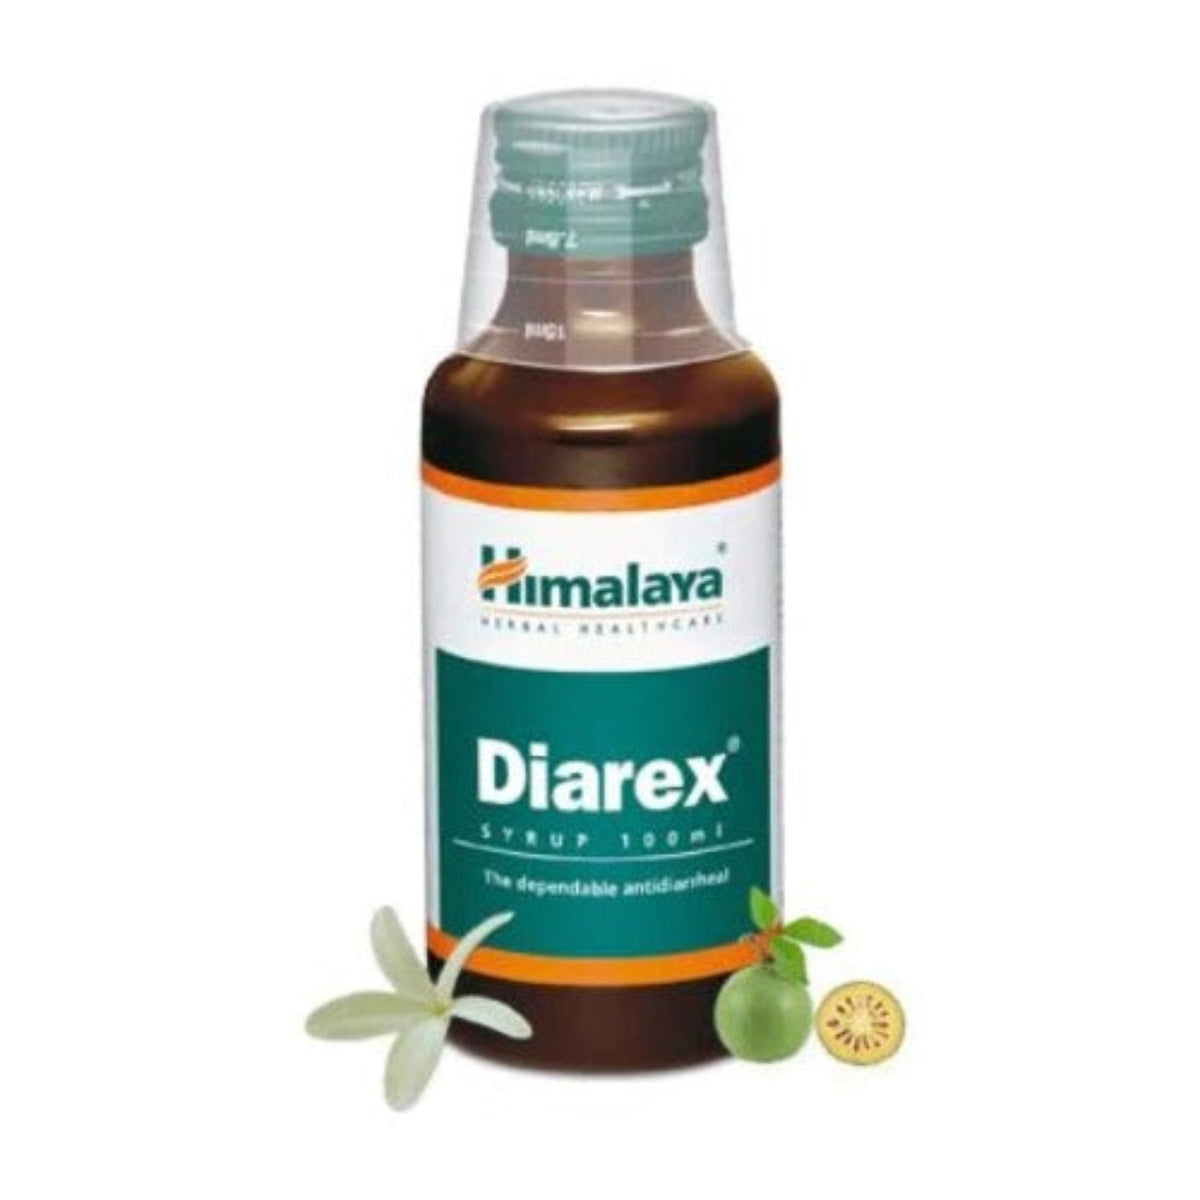 Himalaya Herbal Ayurvedic Diarex Der zuverlässige Antidiarrhoikum-Sirup 100 ml